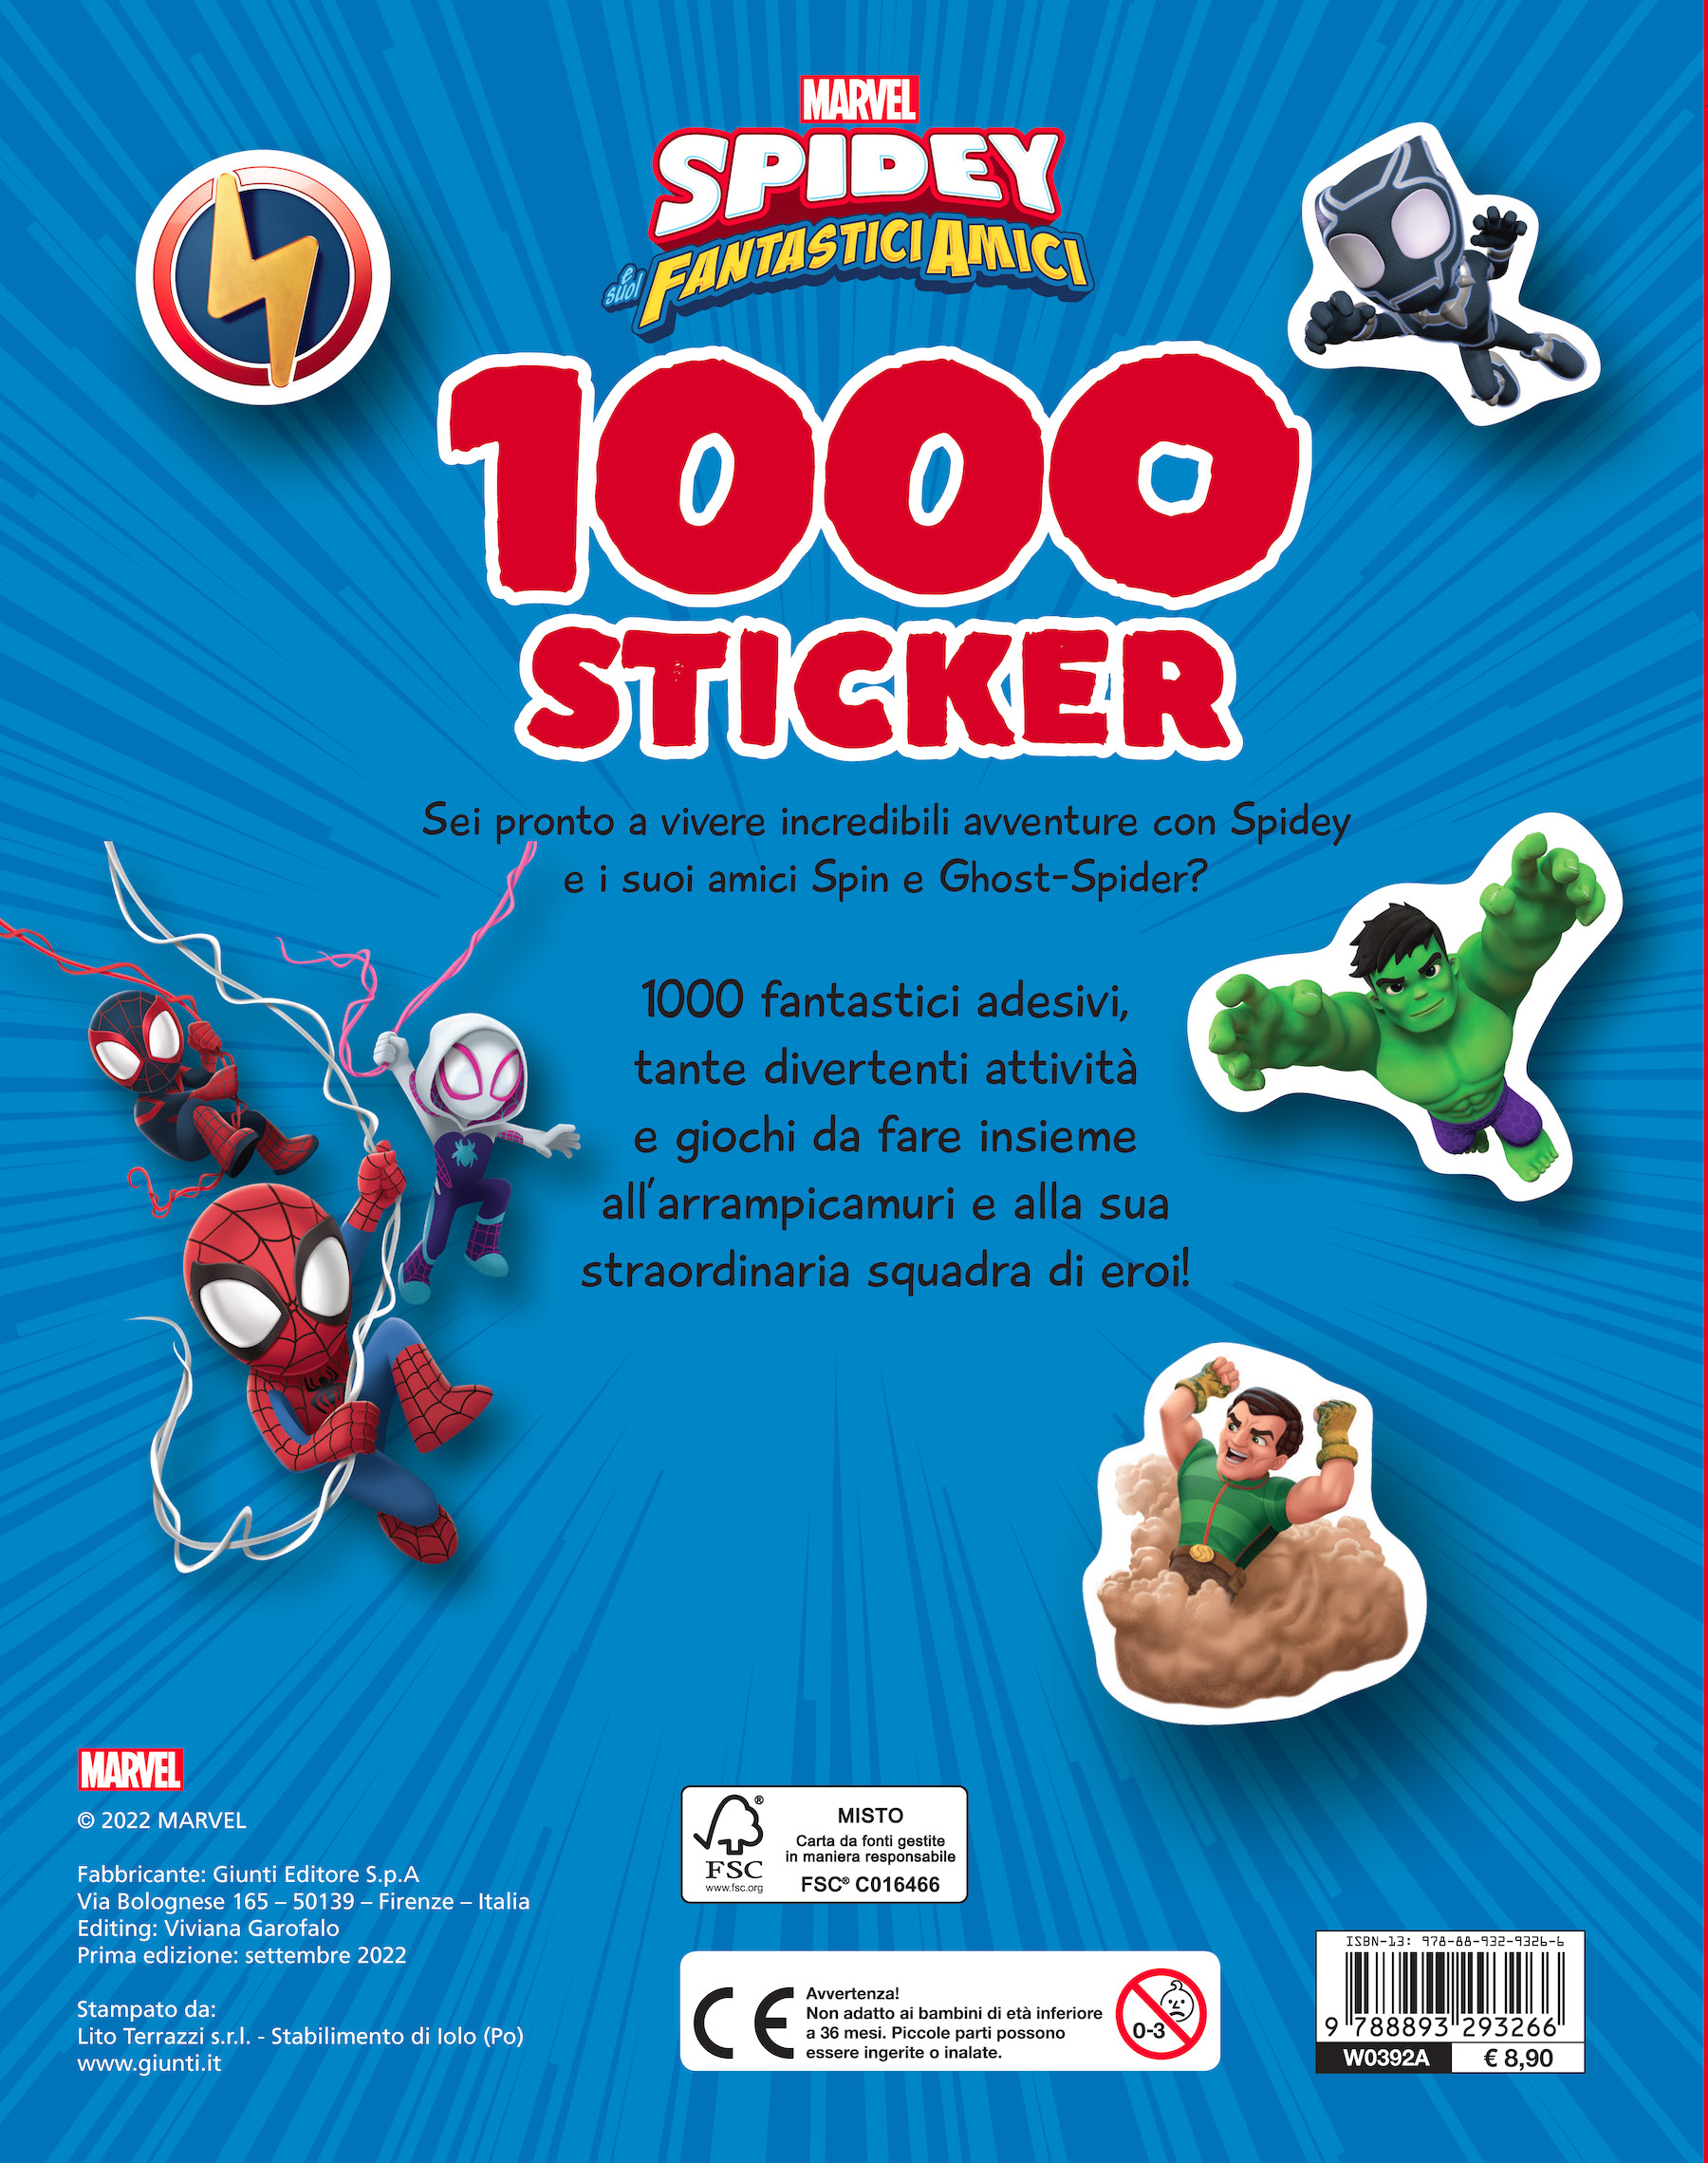 Spidey and his amazing friends 1000 Sticker